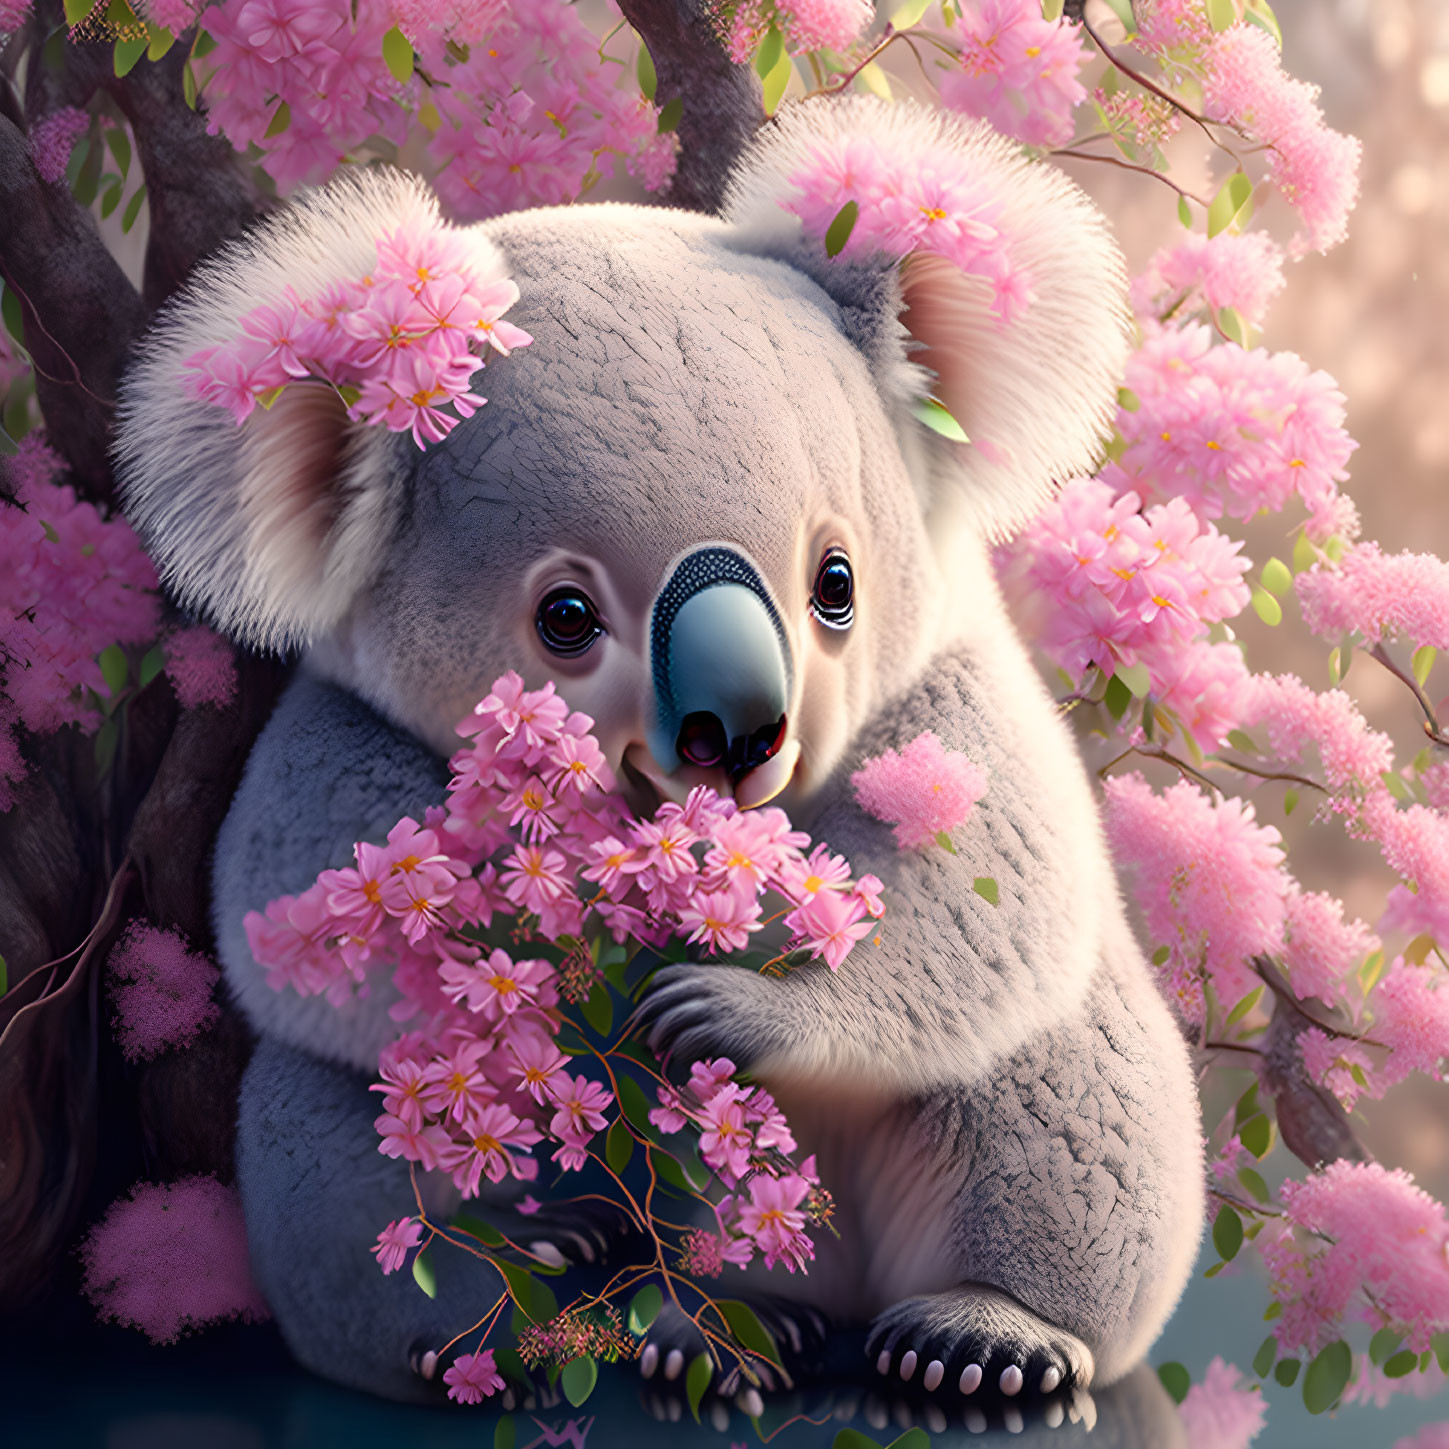 Fluffy koala with pink blossoms in tree habitat